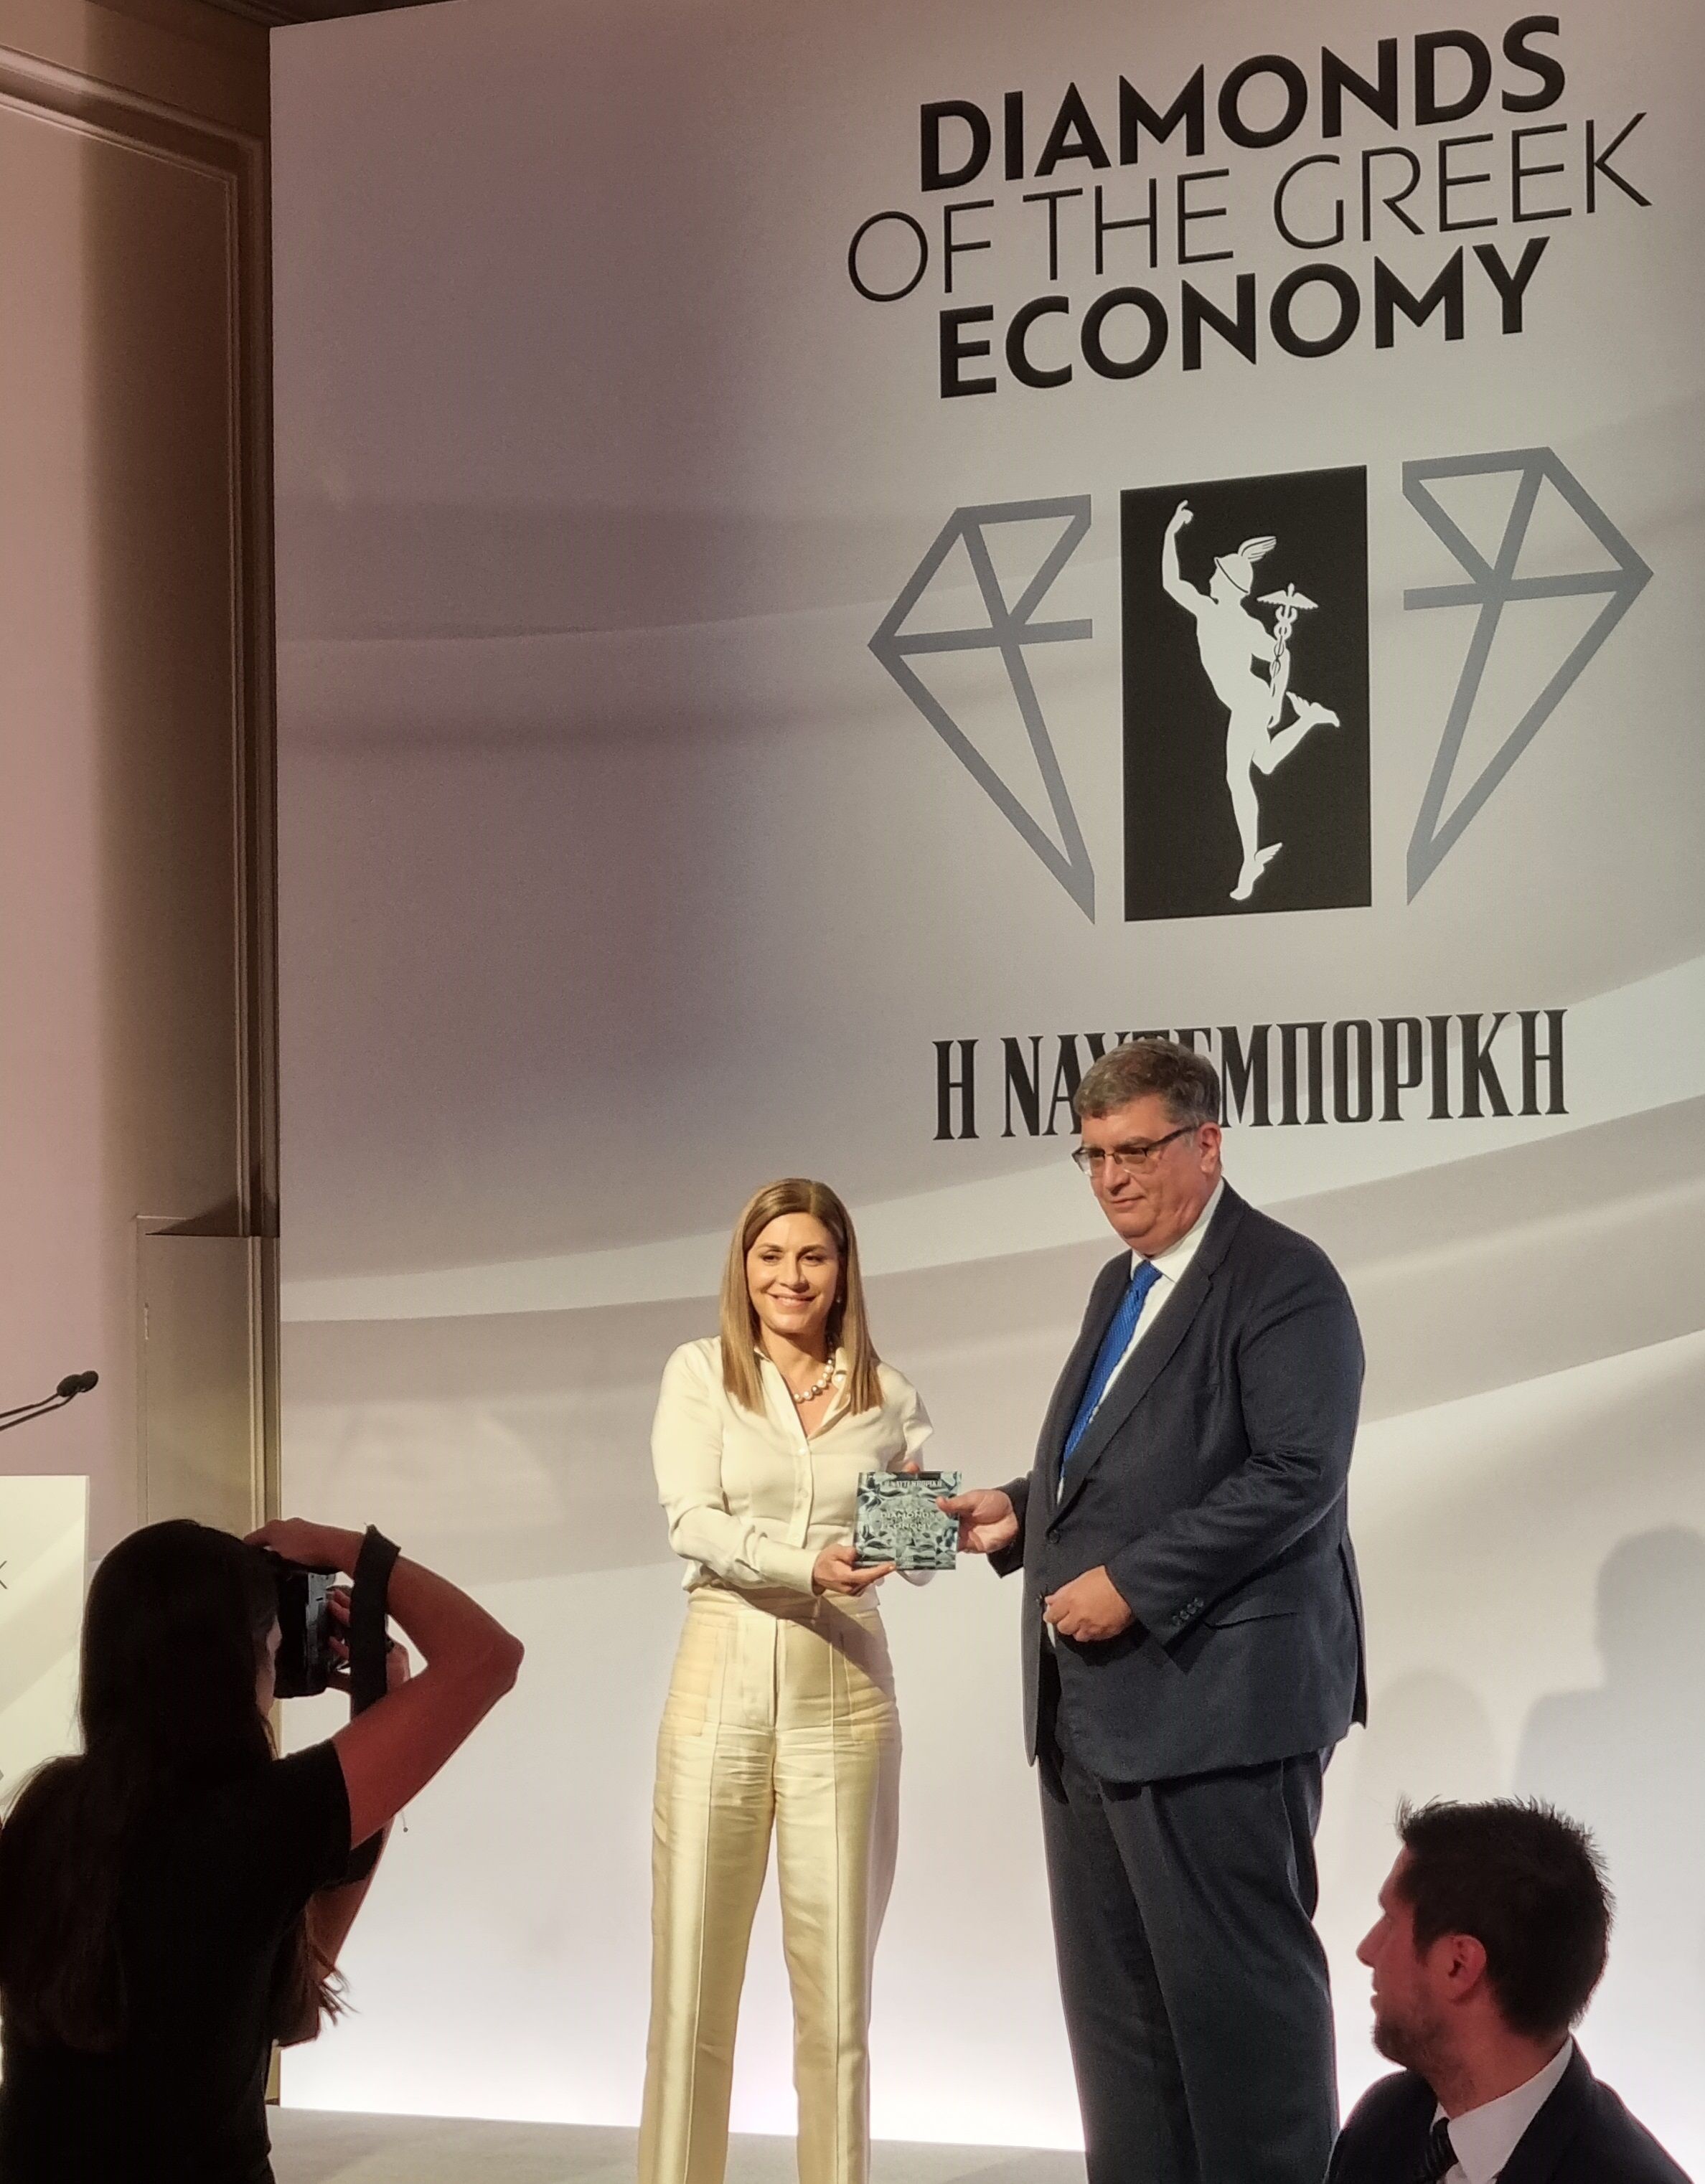 kpmg at greek diamonds awards 2022